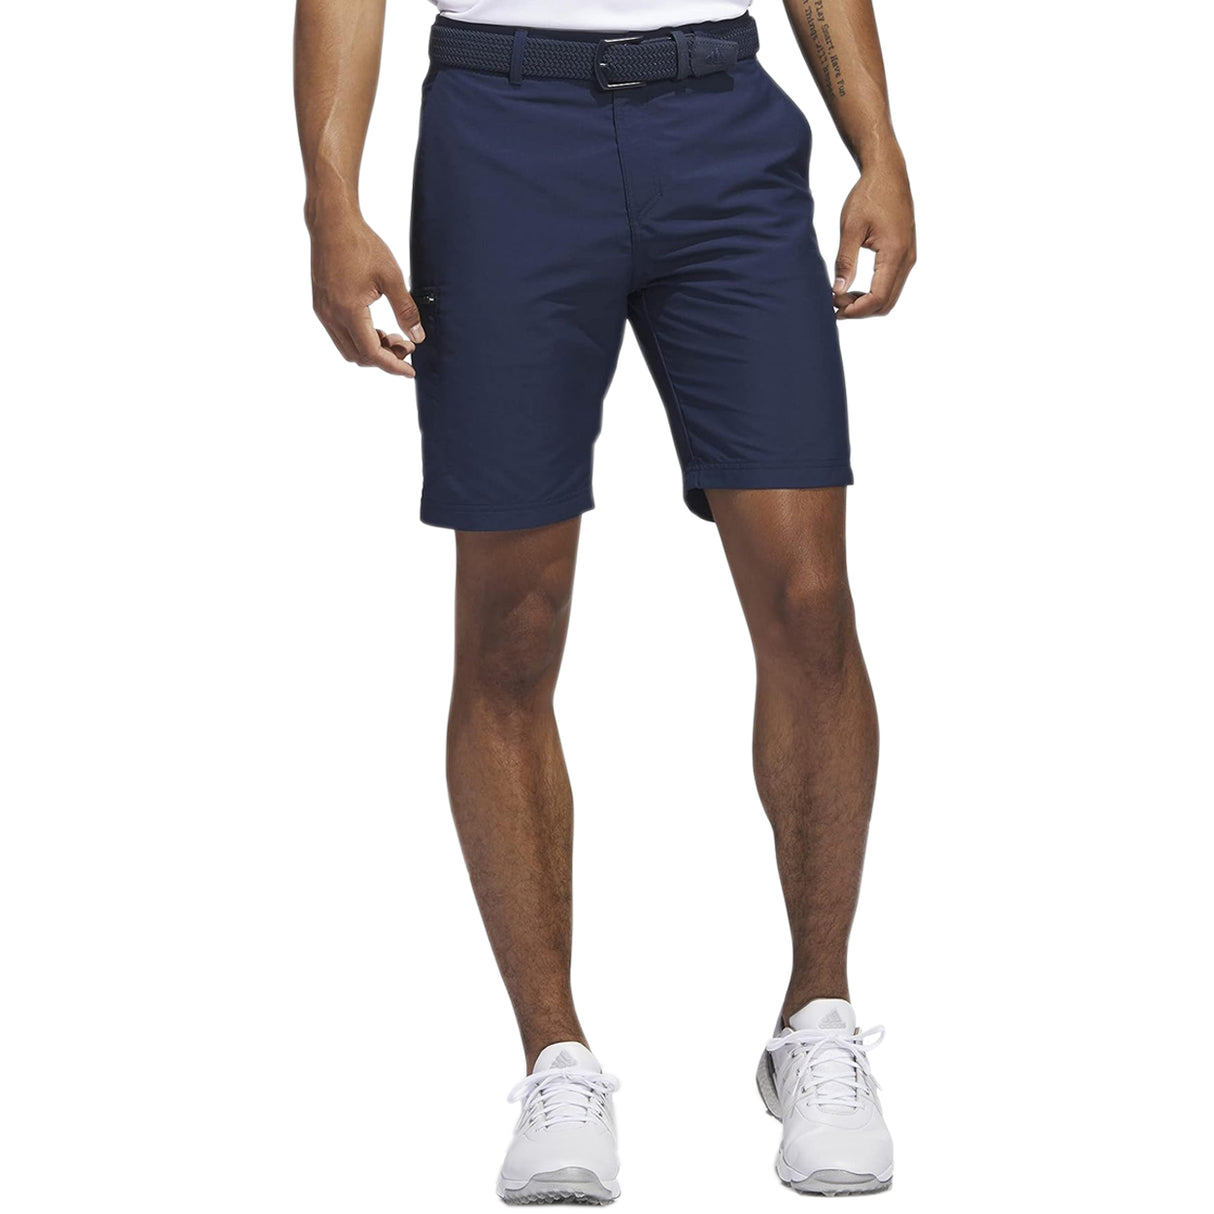 Adidas Men's Cargo 9" Golf Shorts